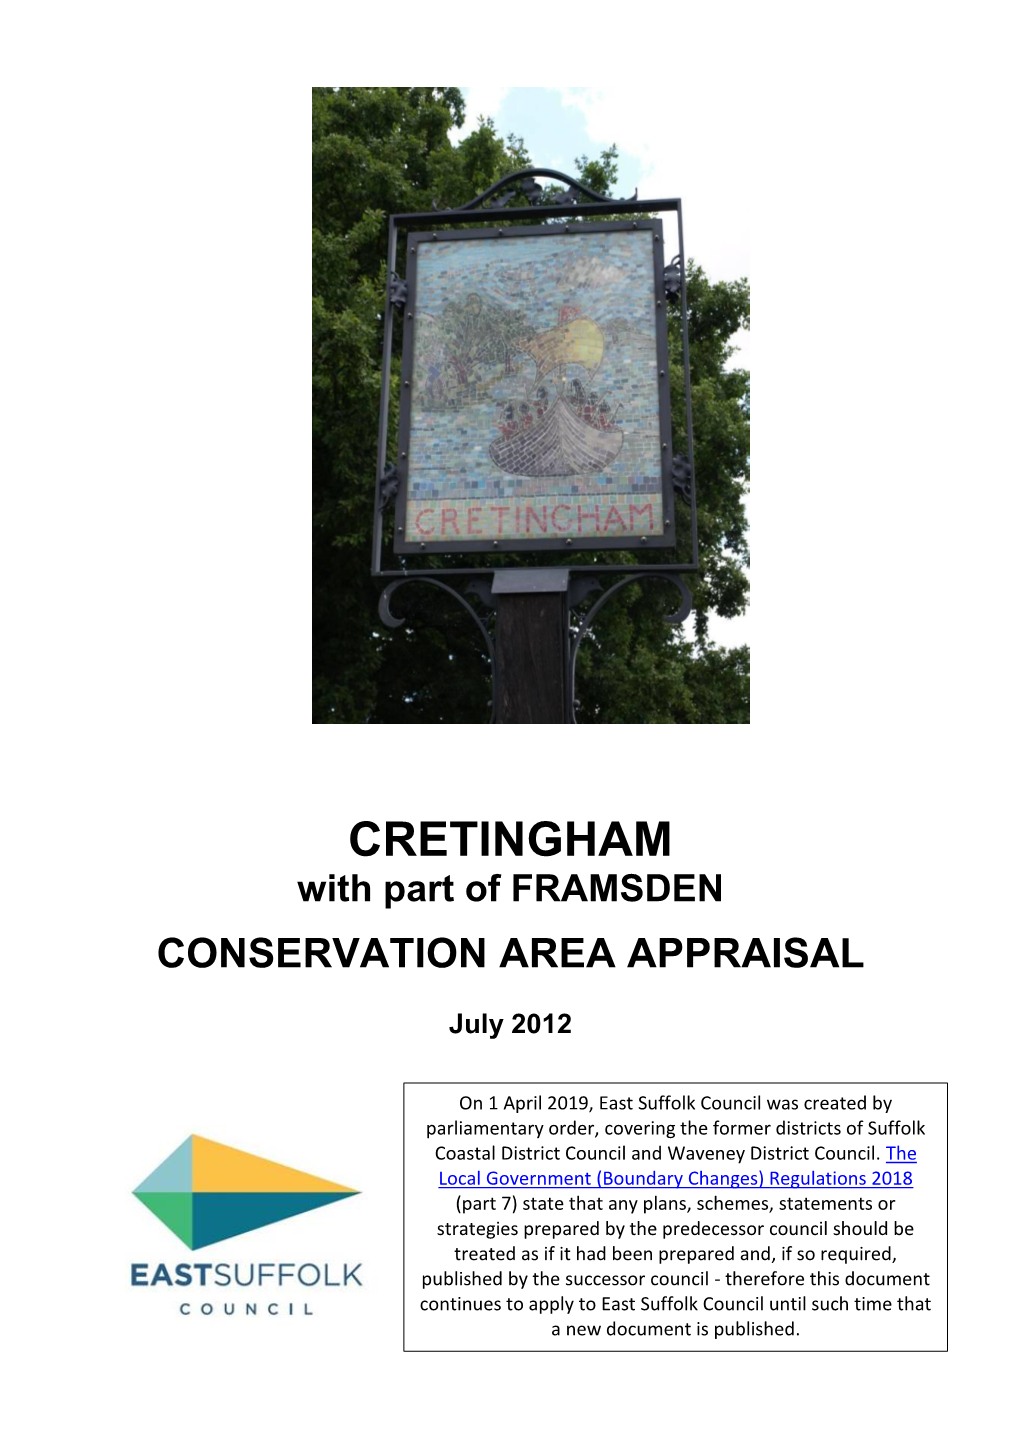 Cretingham Conservation Area Appraisal